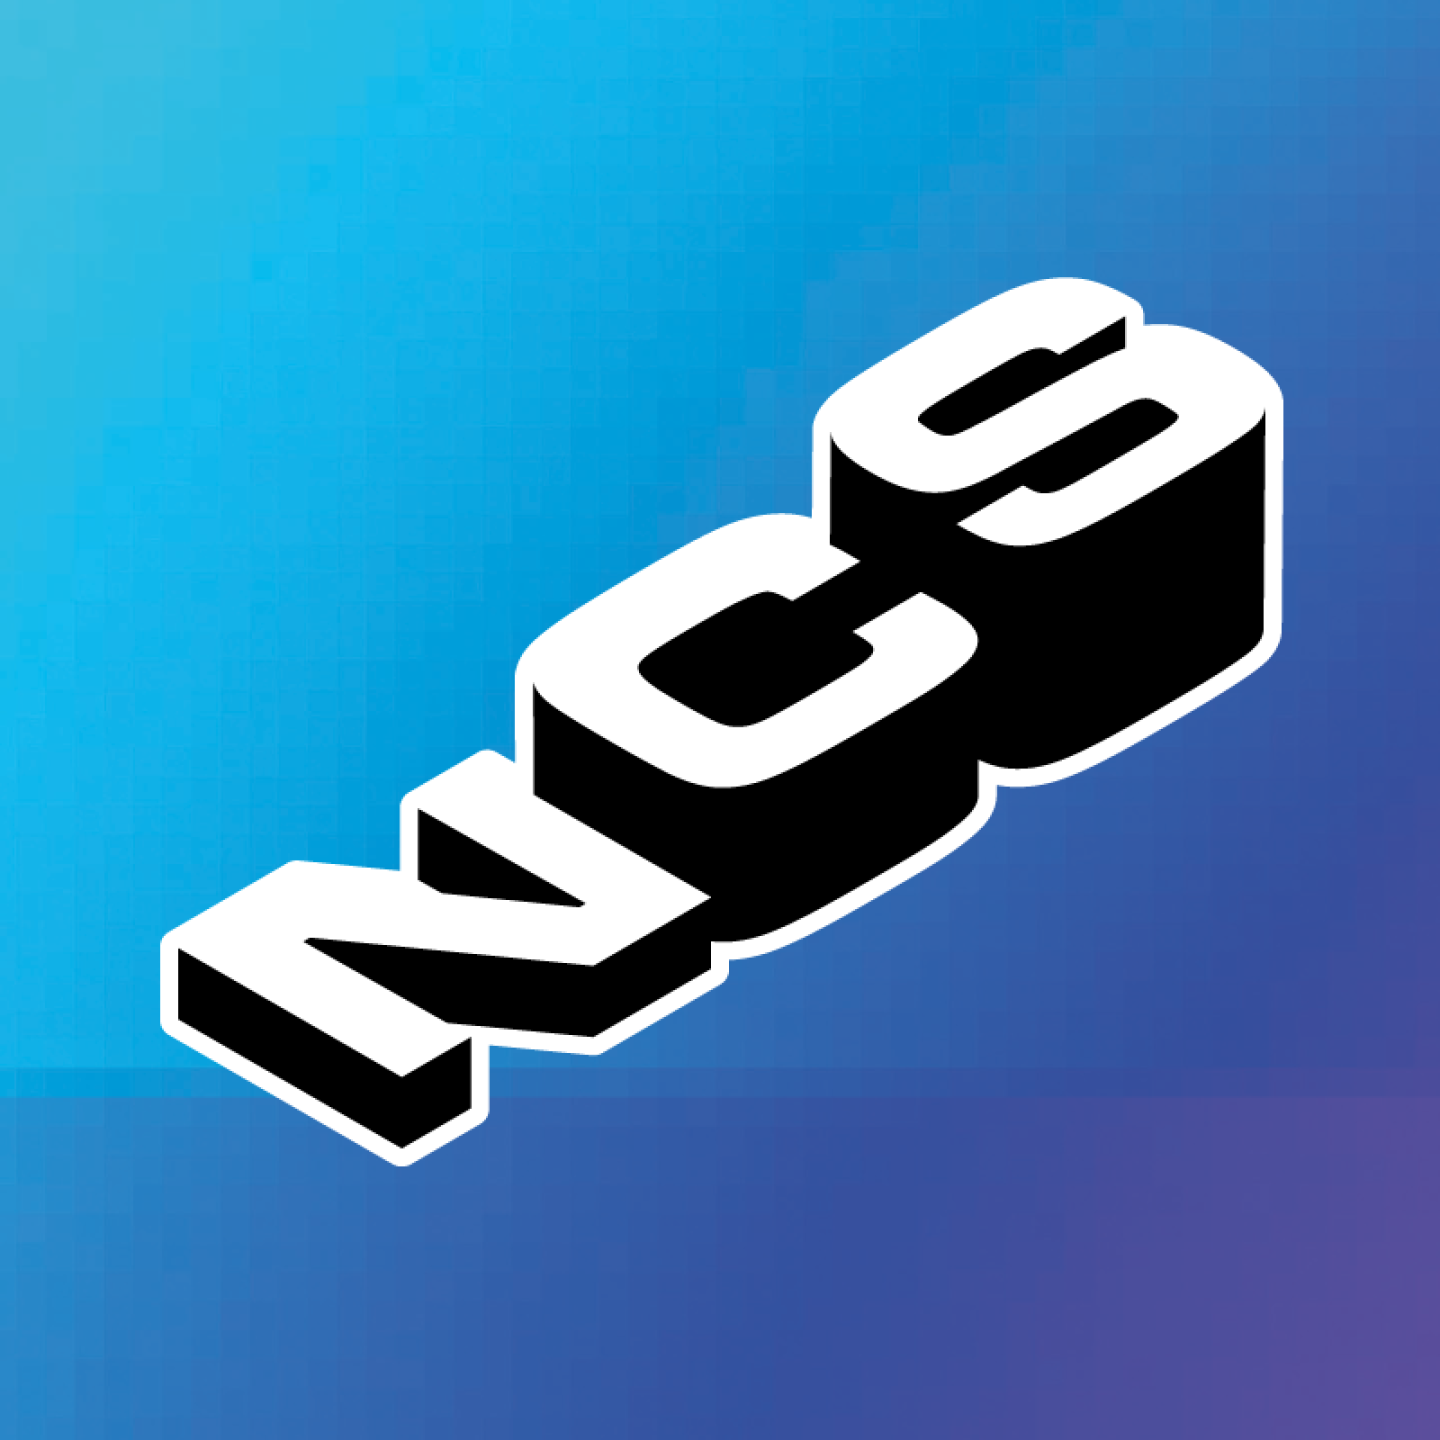 NCS_(National_Citizen_Service)_Logo